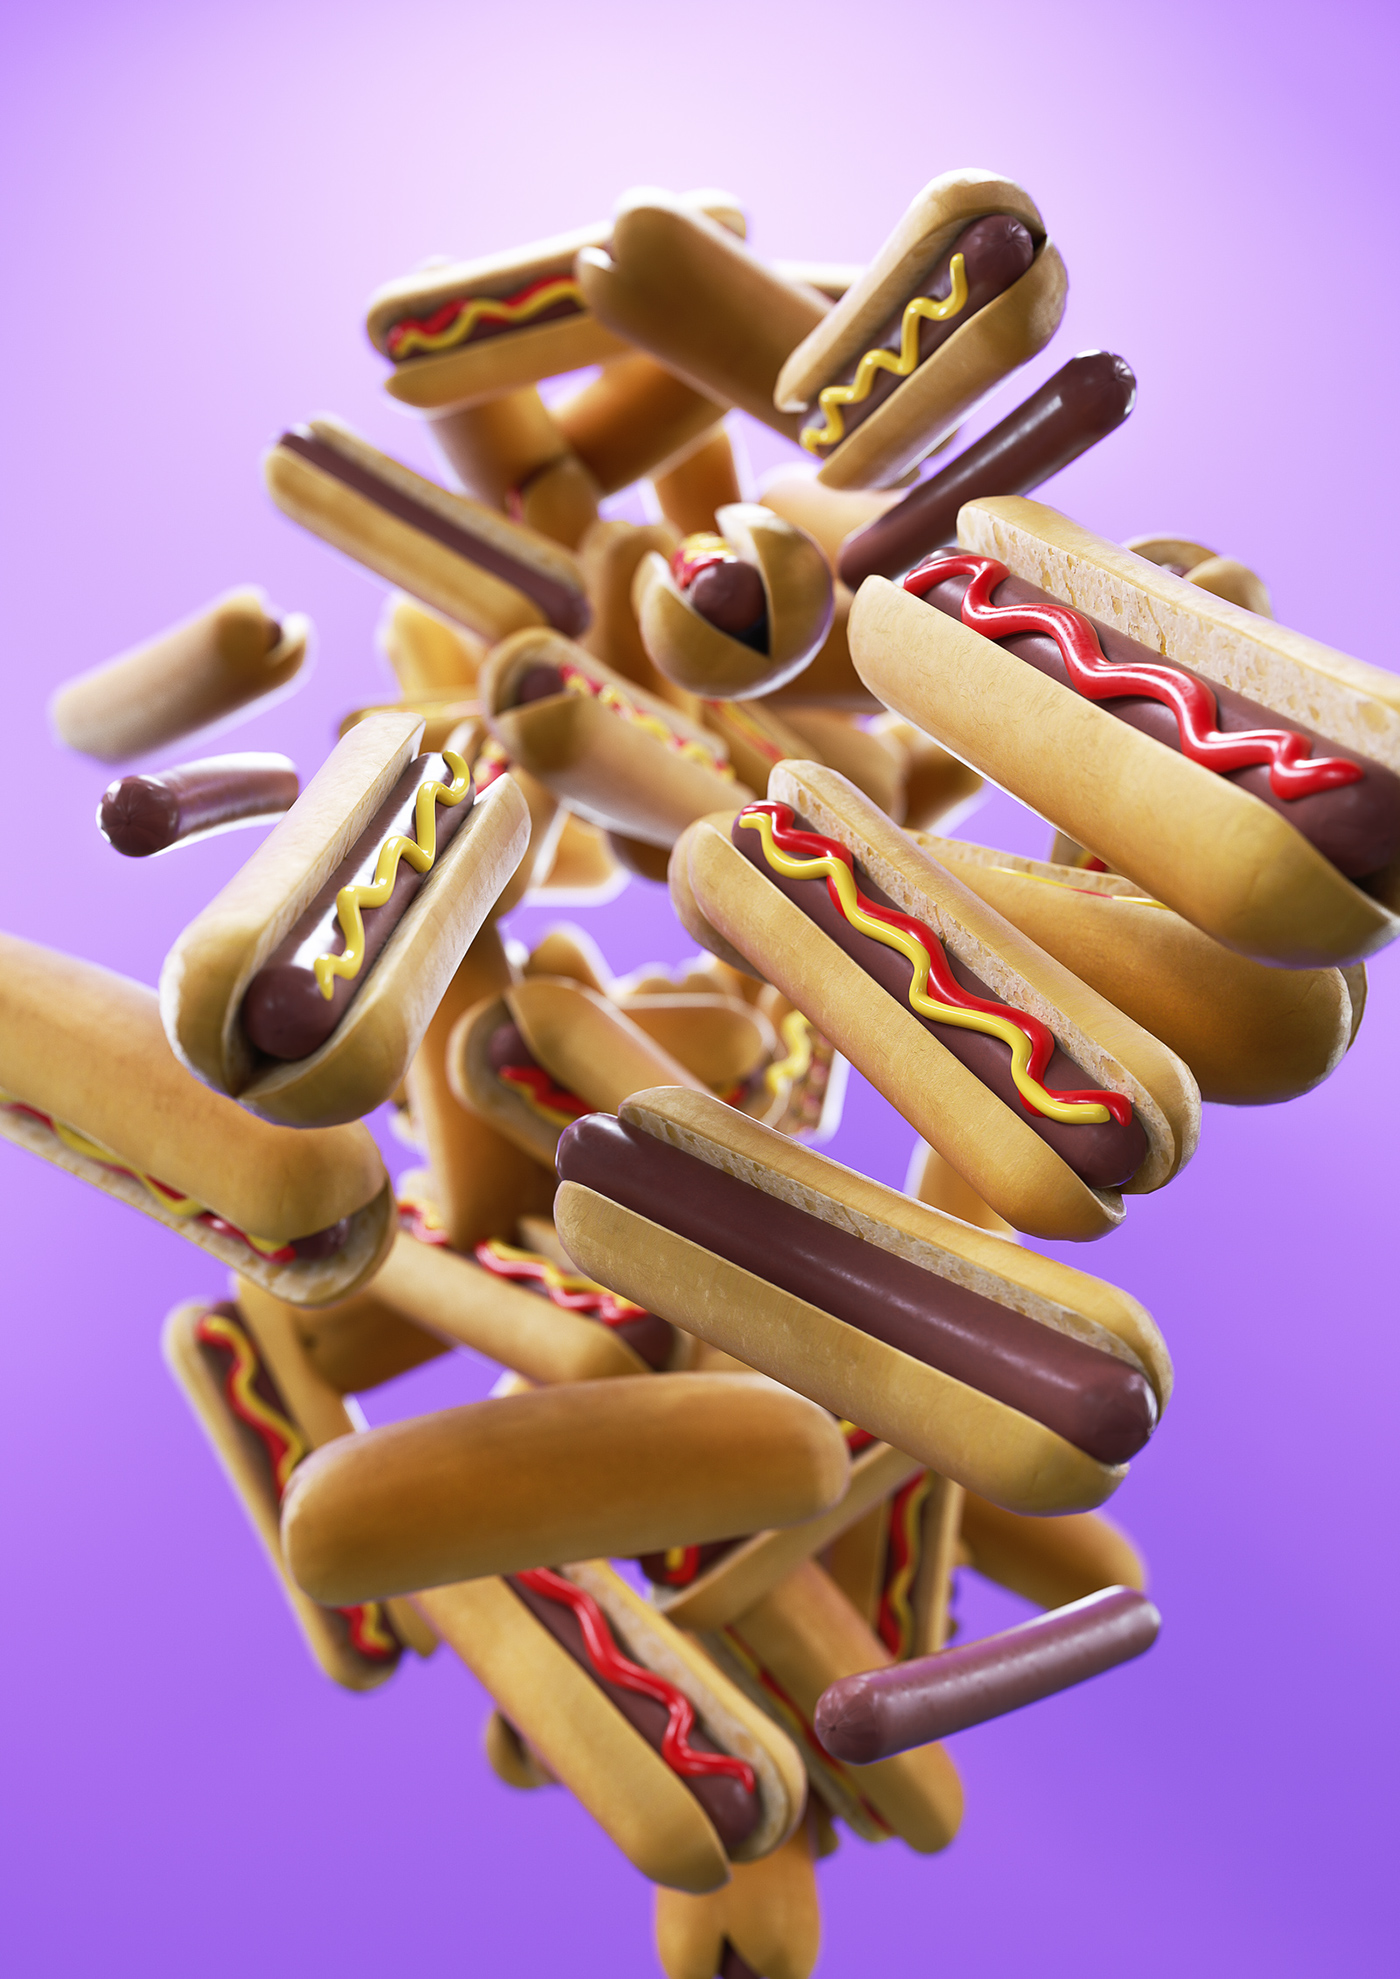 3D CGI CG Food  Donuts art